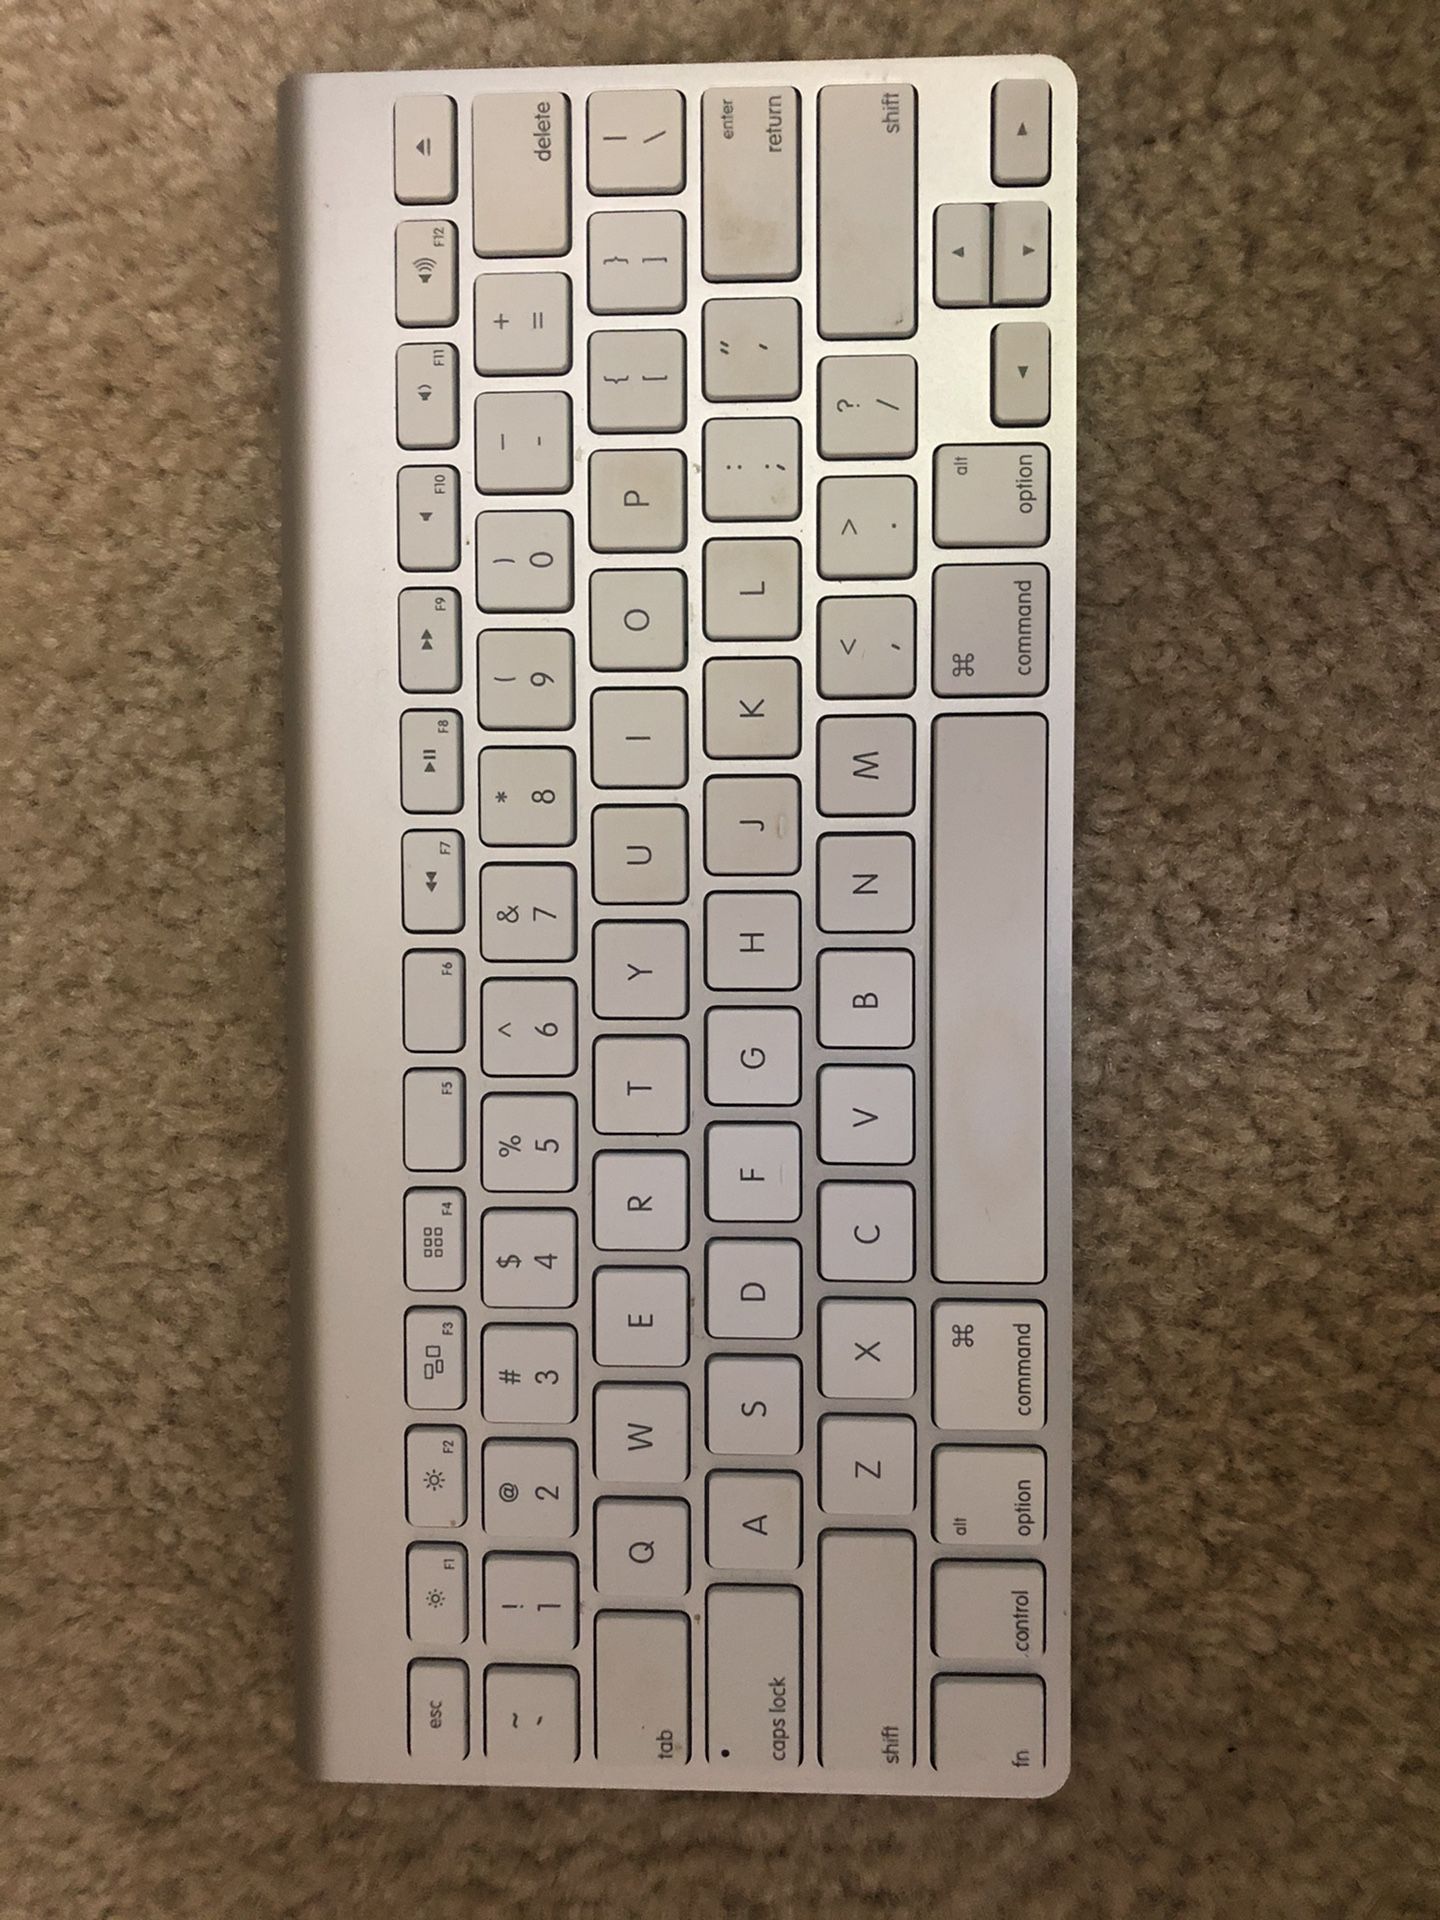 Apple A1314 Wireless Keyboard - Silver (MC184LL/B)